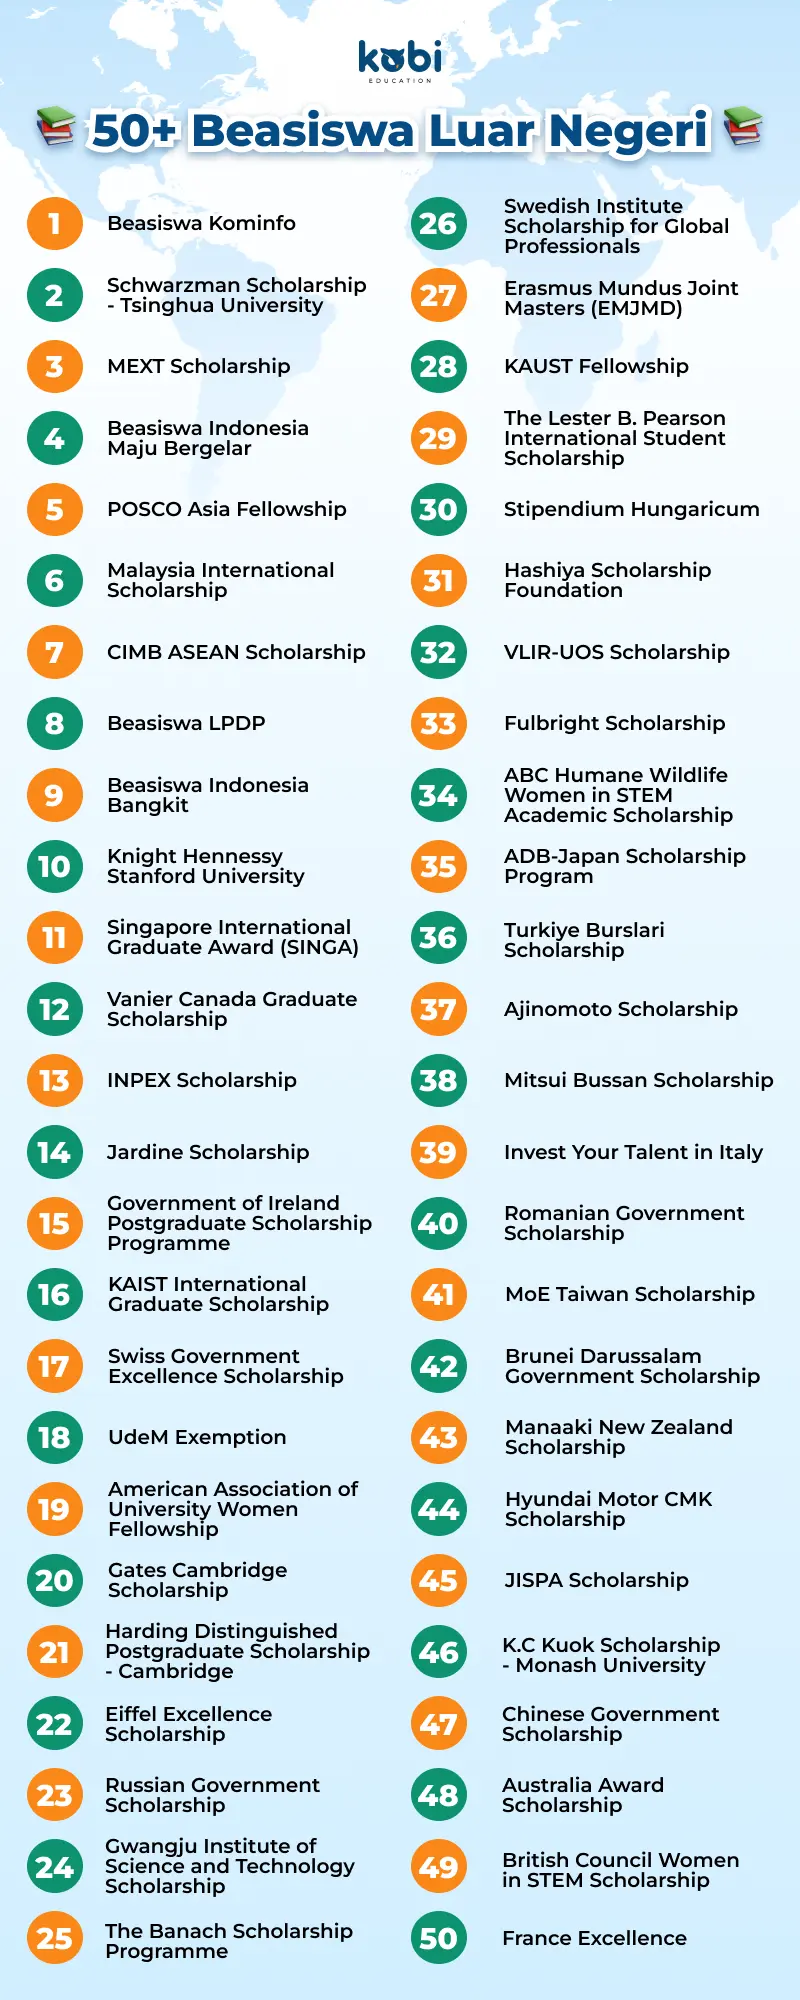 kobi education-beasiswa luar negeri-gambar list full 54 beasiswa luar negeri infografis